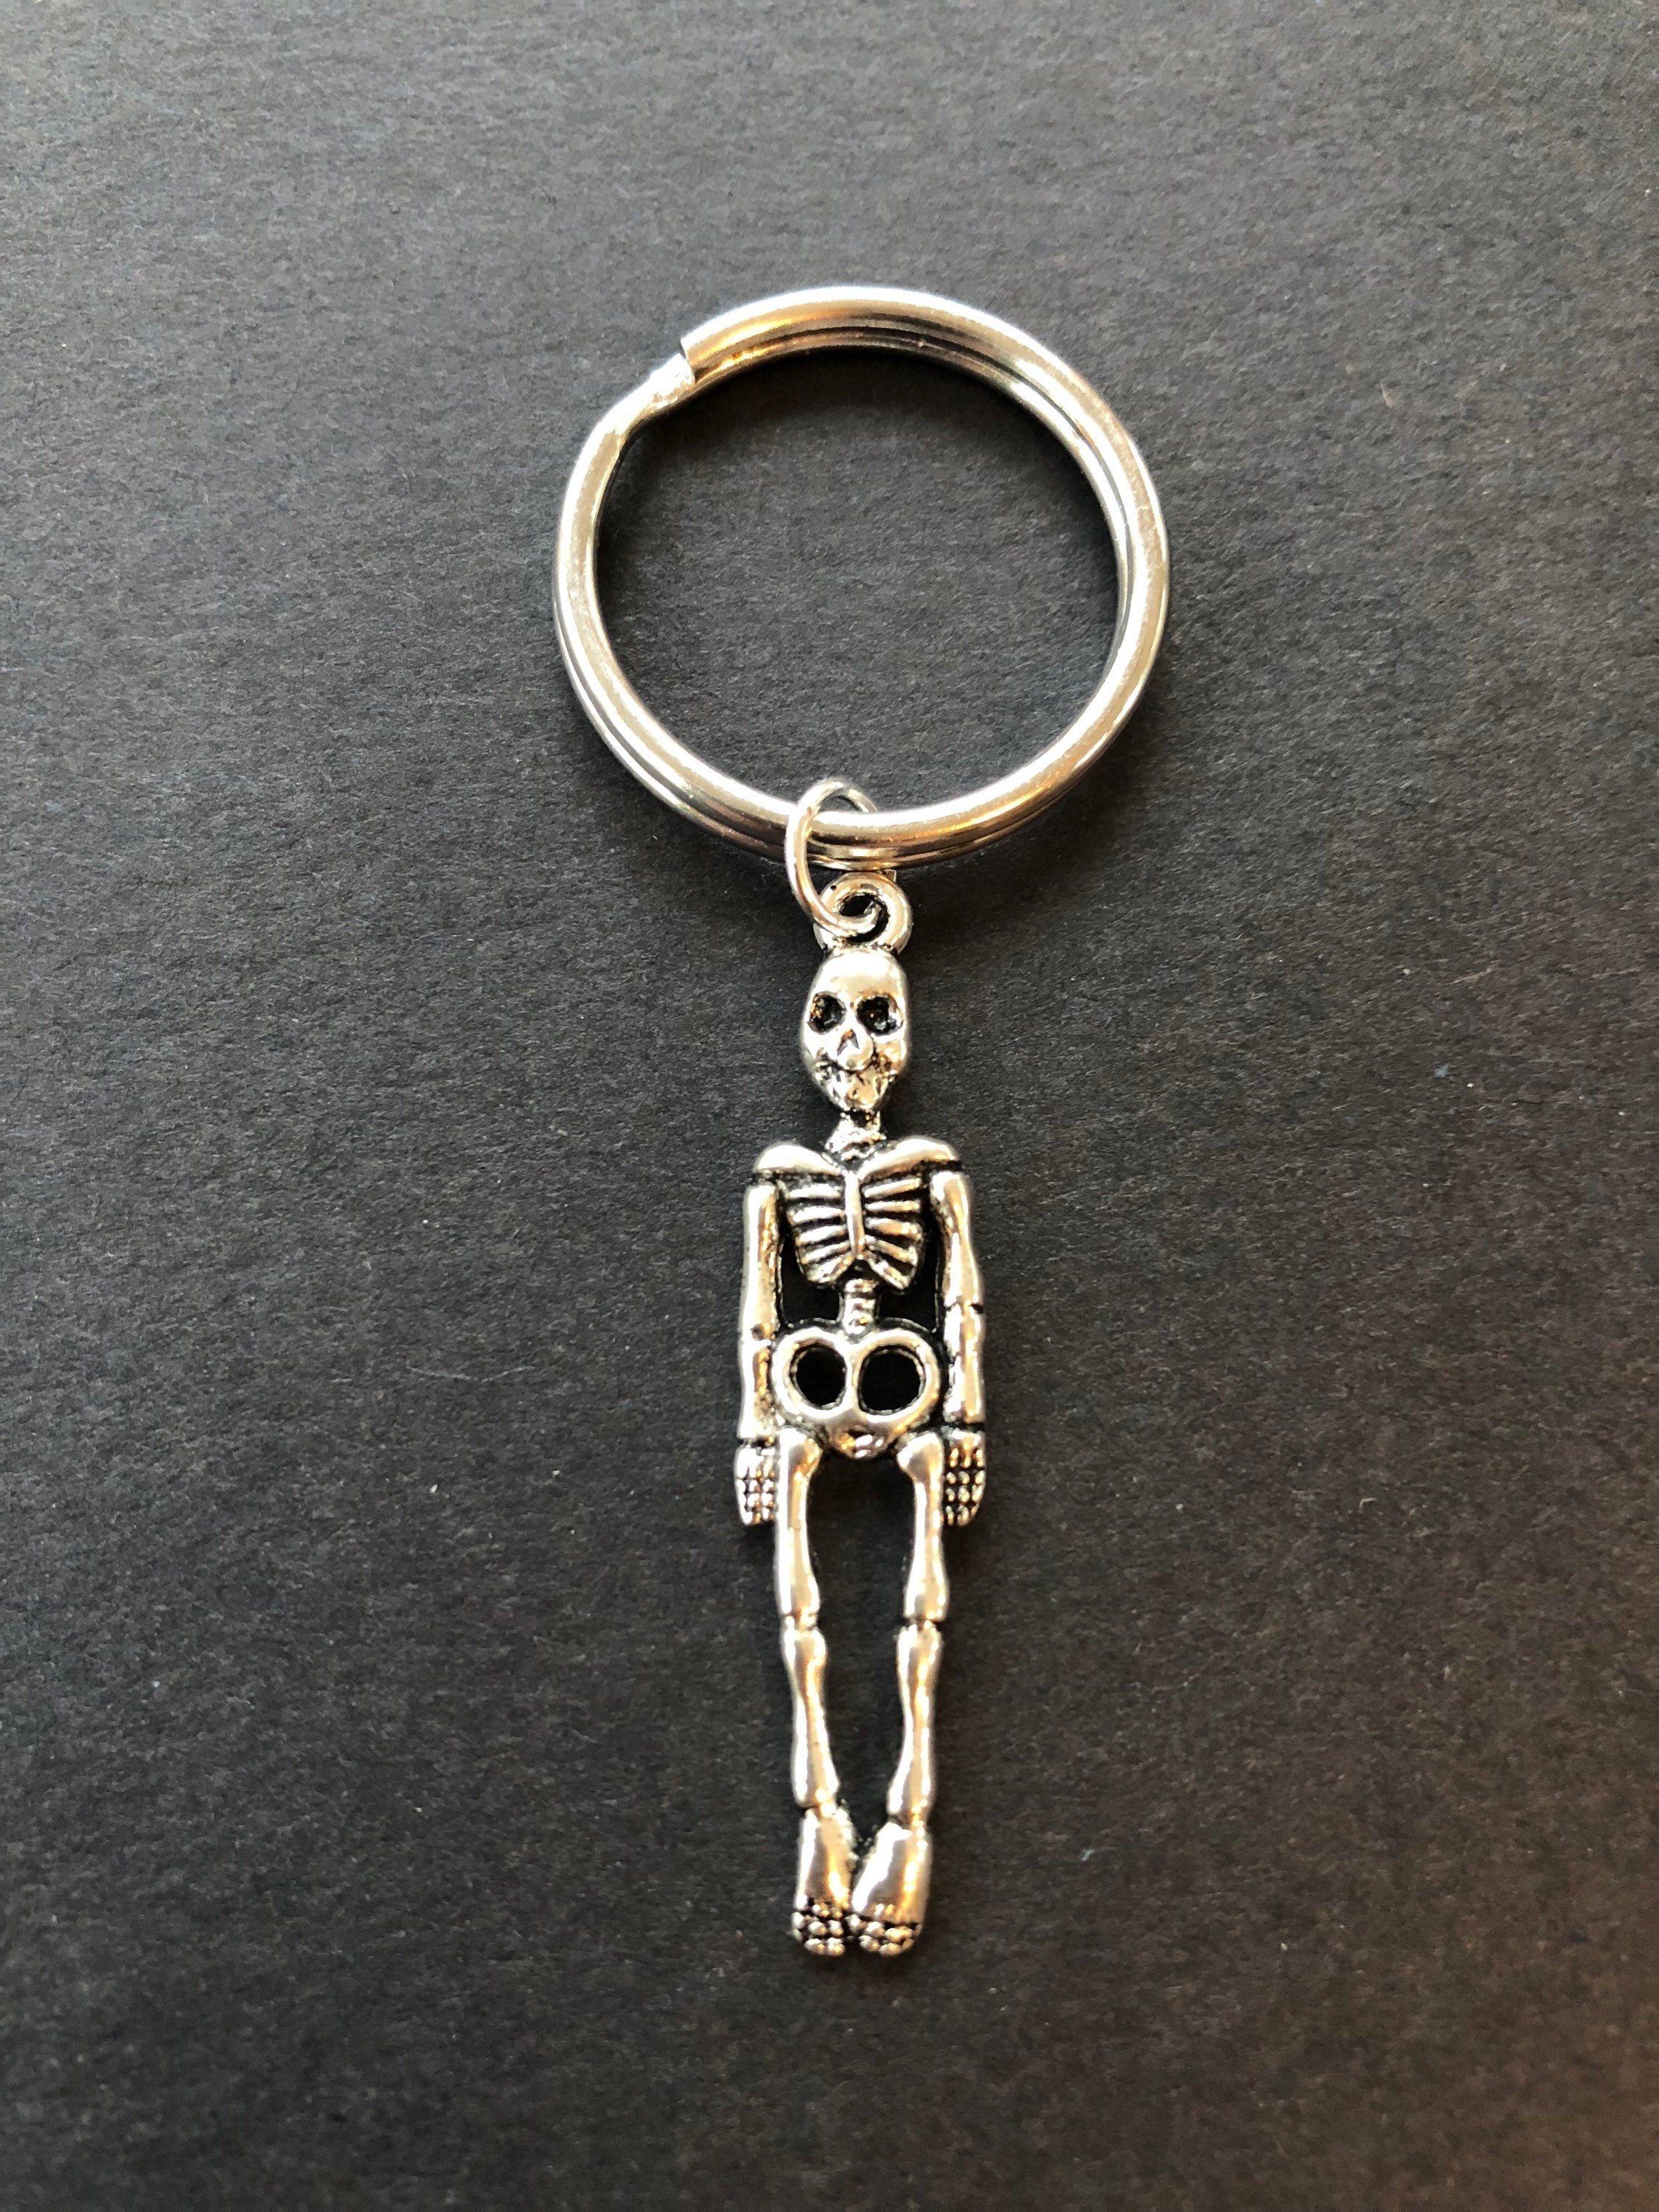 Xray Tech Gift Skeleton Keychain Caduceus Medical Symbol Skull Anatomy Bones Ortho Orthopedic Keyring Cute Small Halloween Party Favor